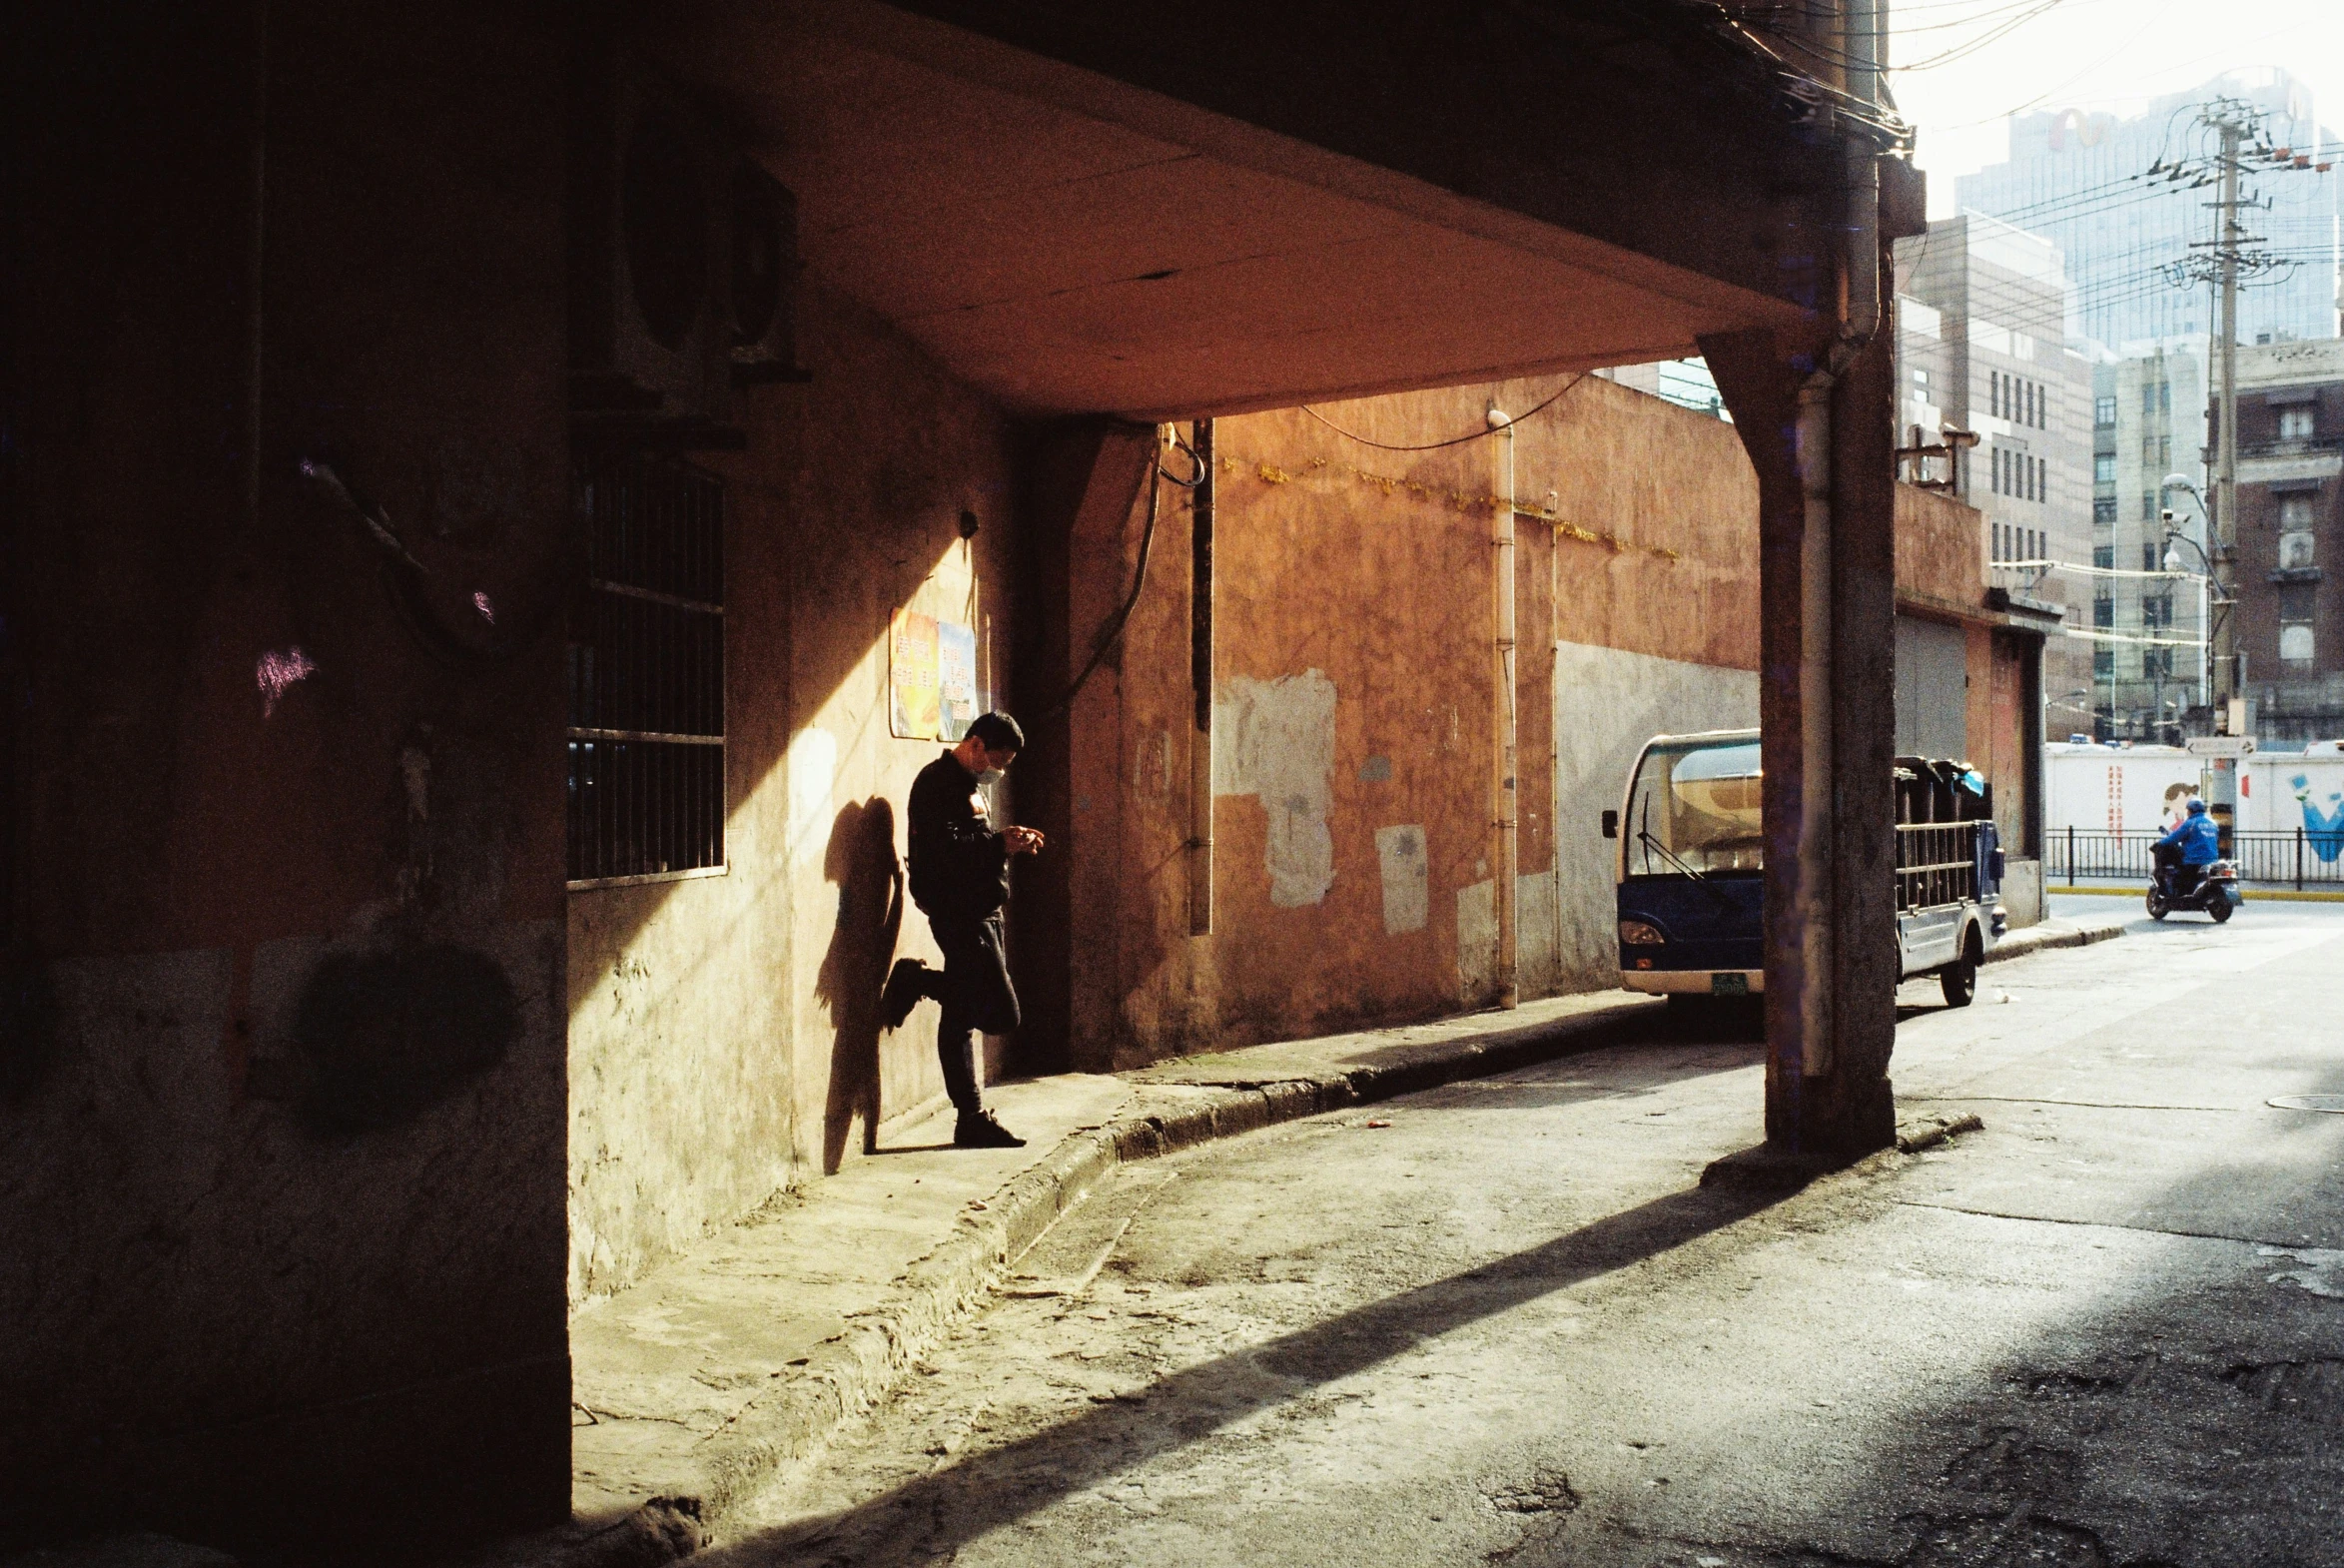 two men walking down an alleyway in the city